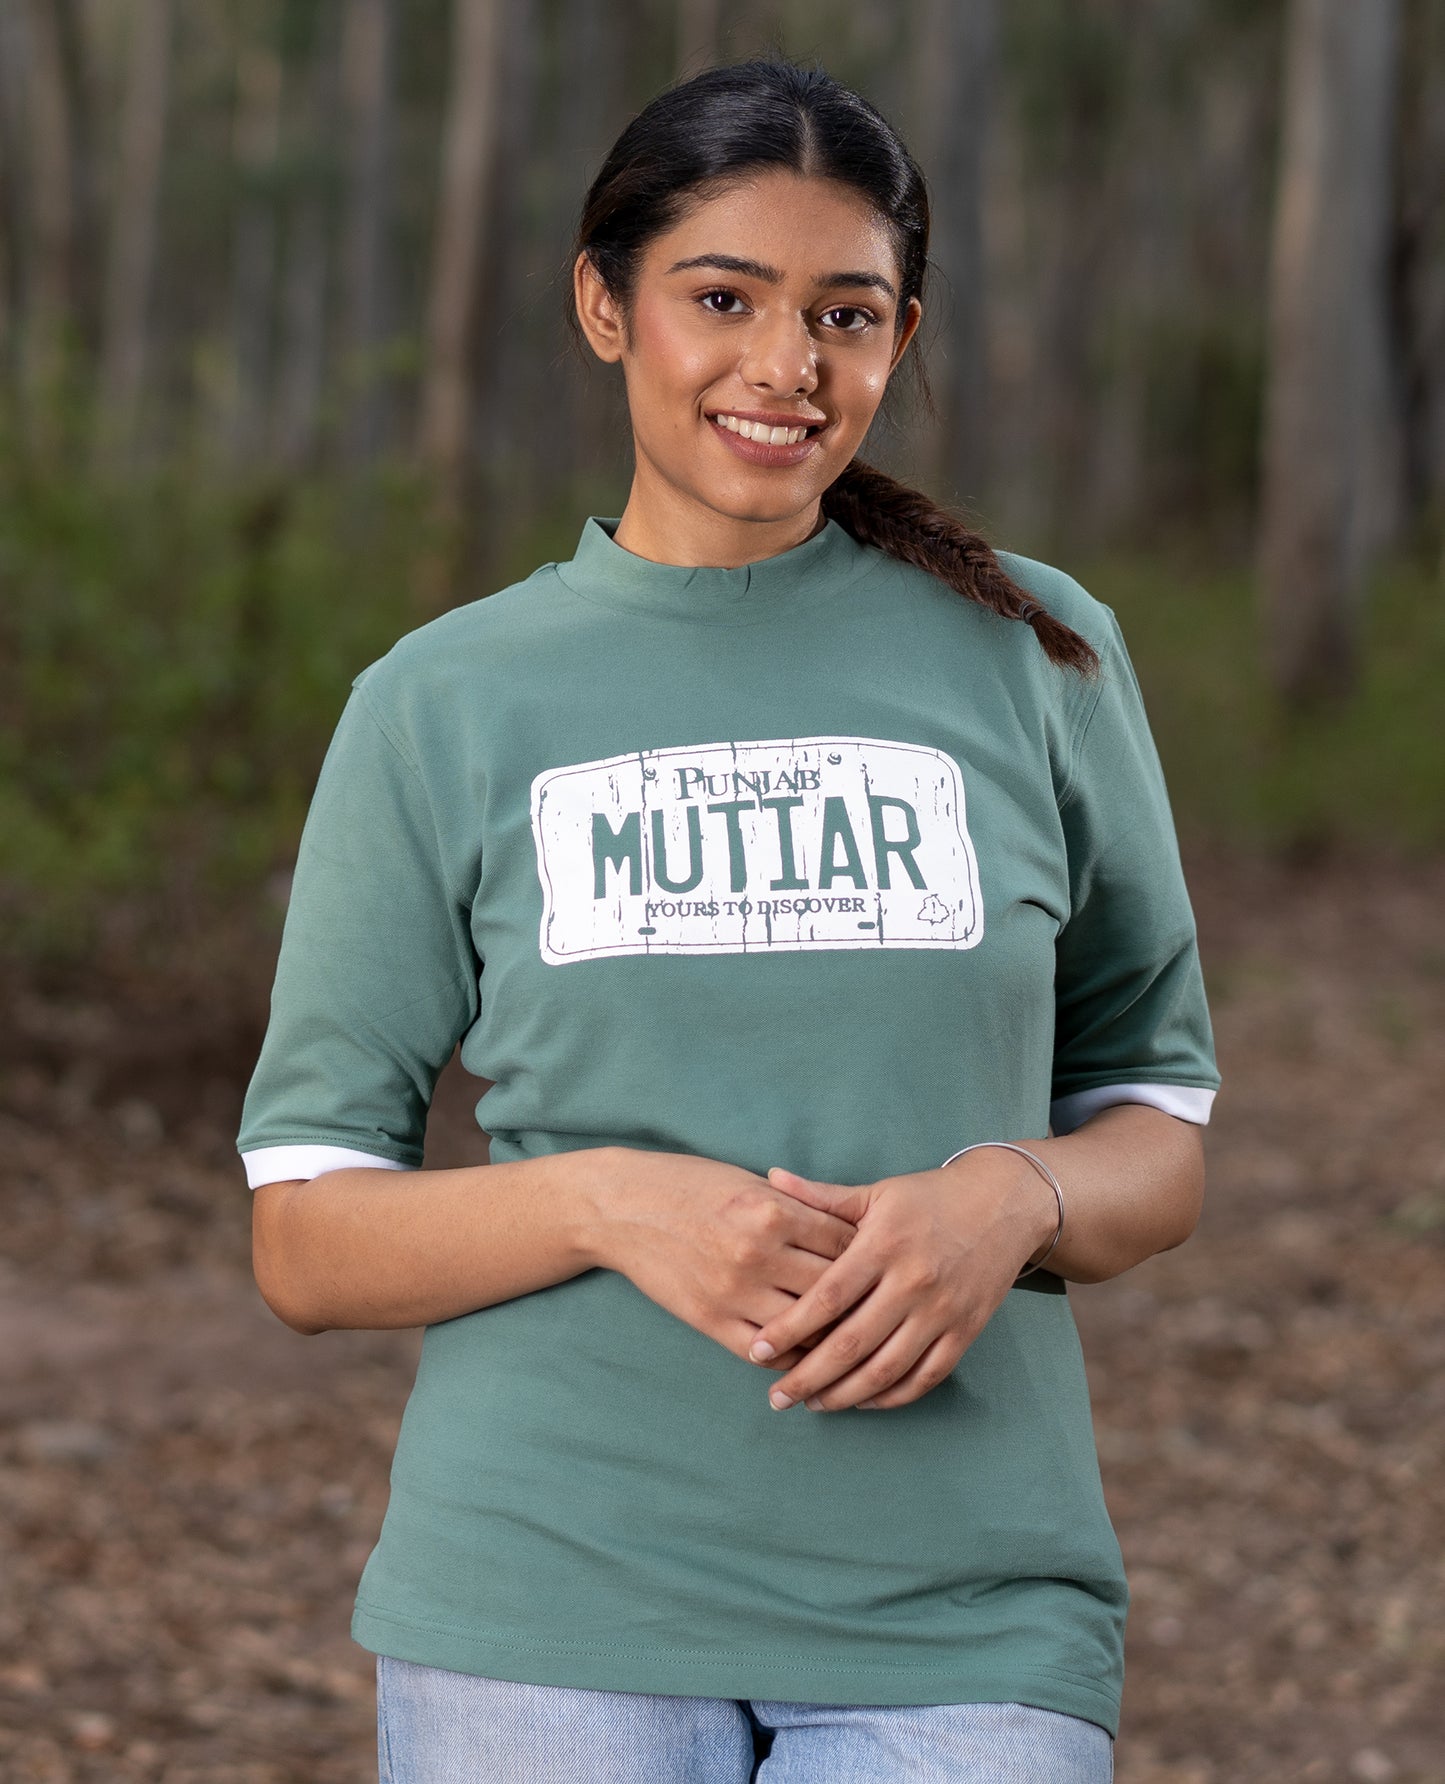 Mutiar Aqua Marine T-Shirt